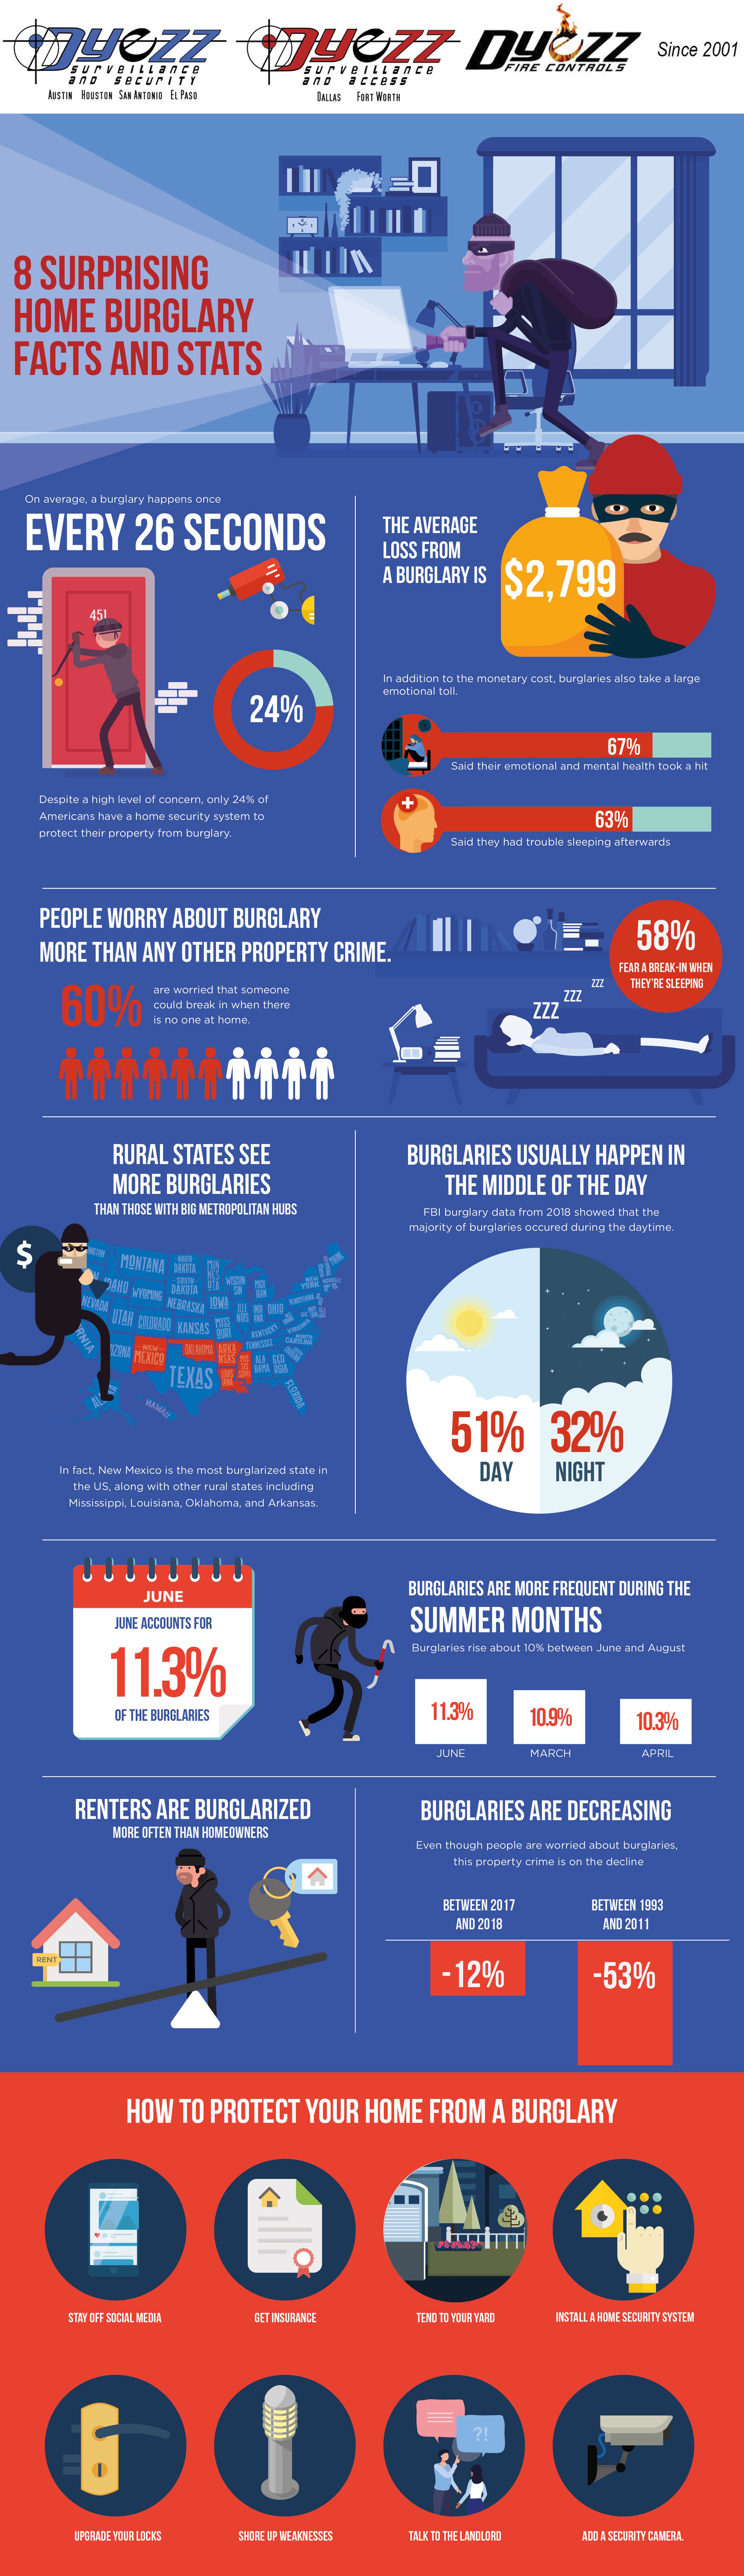 Dyezz-Burglary-Infographic.jpg